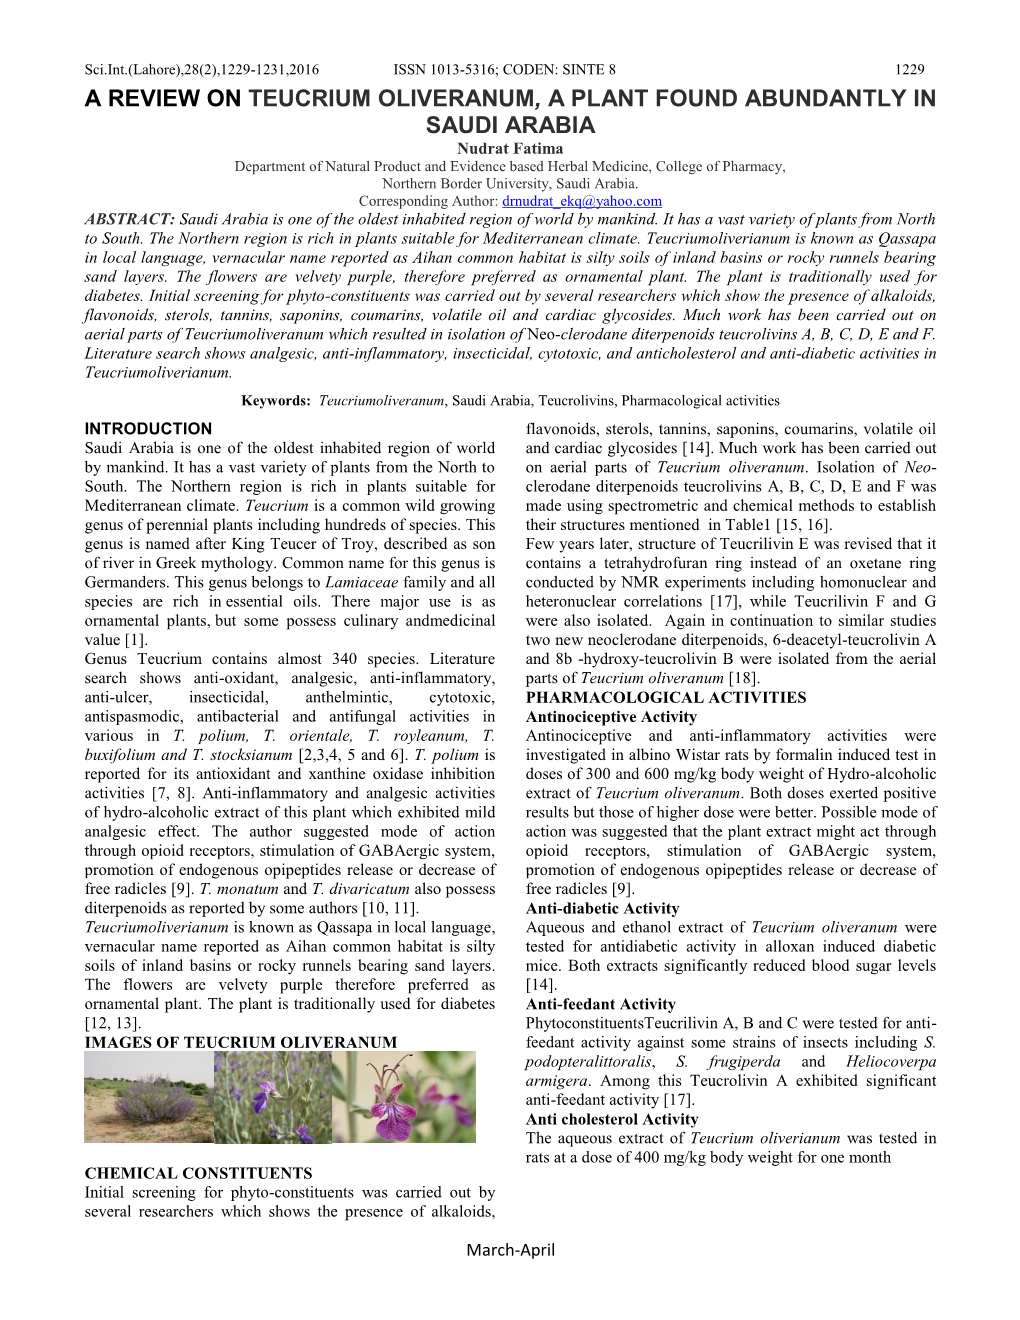 A Review on Teucrium Oliveranum, a Plant Found